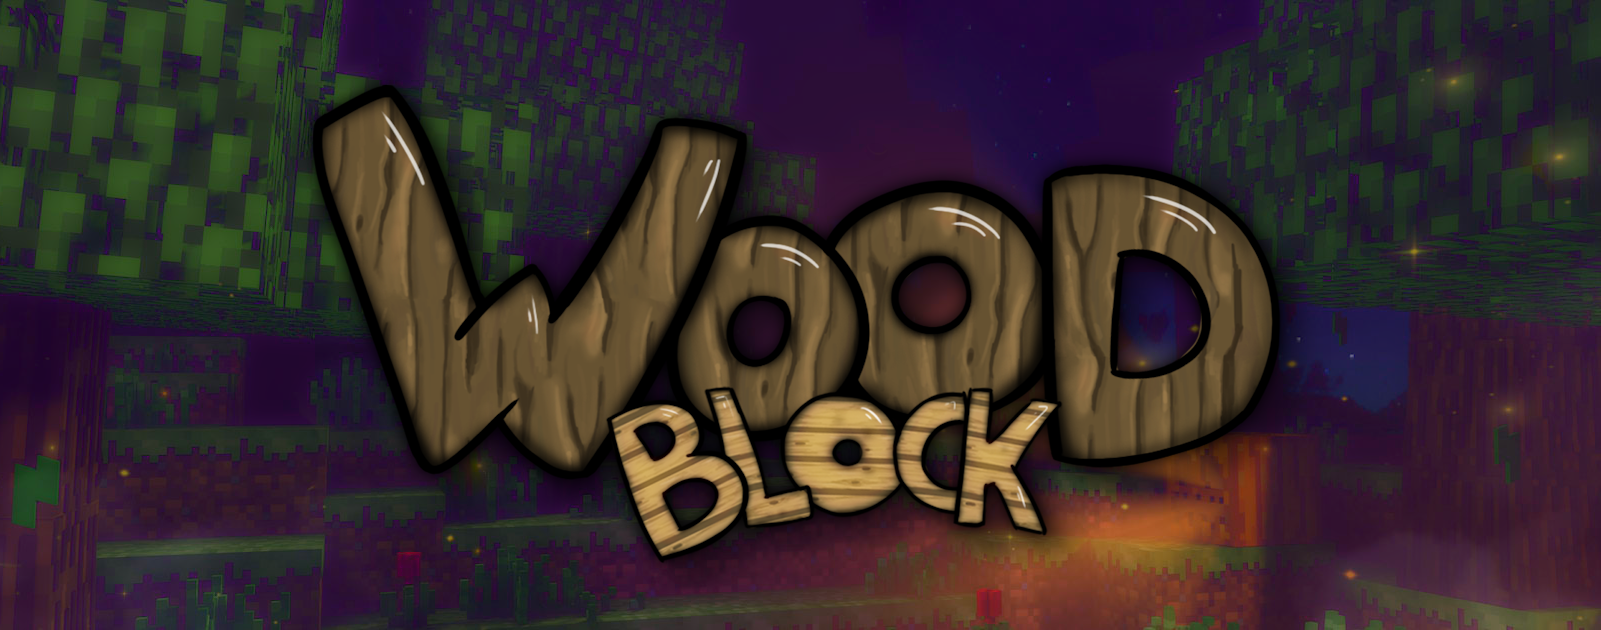 WoodBlock